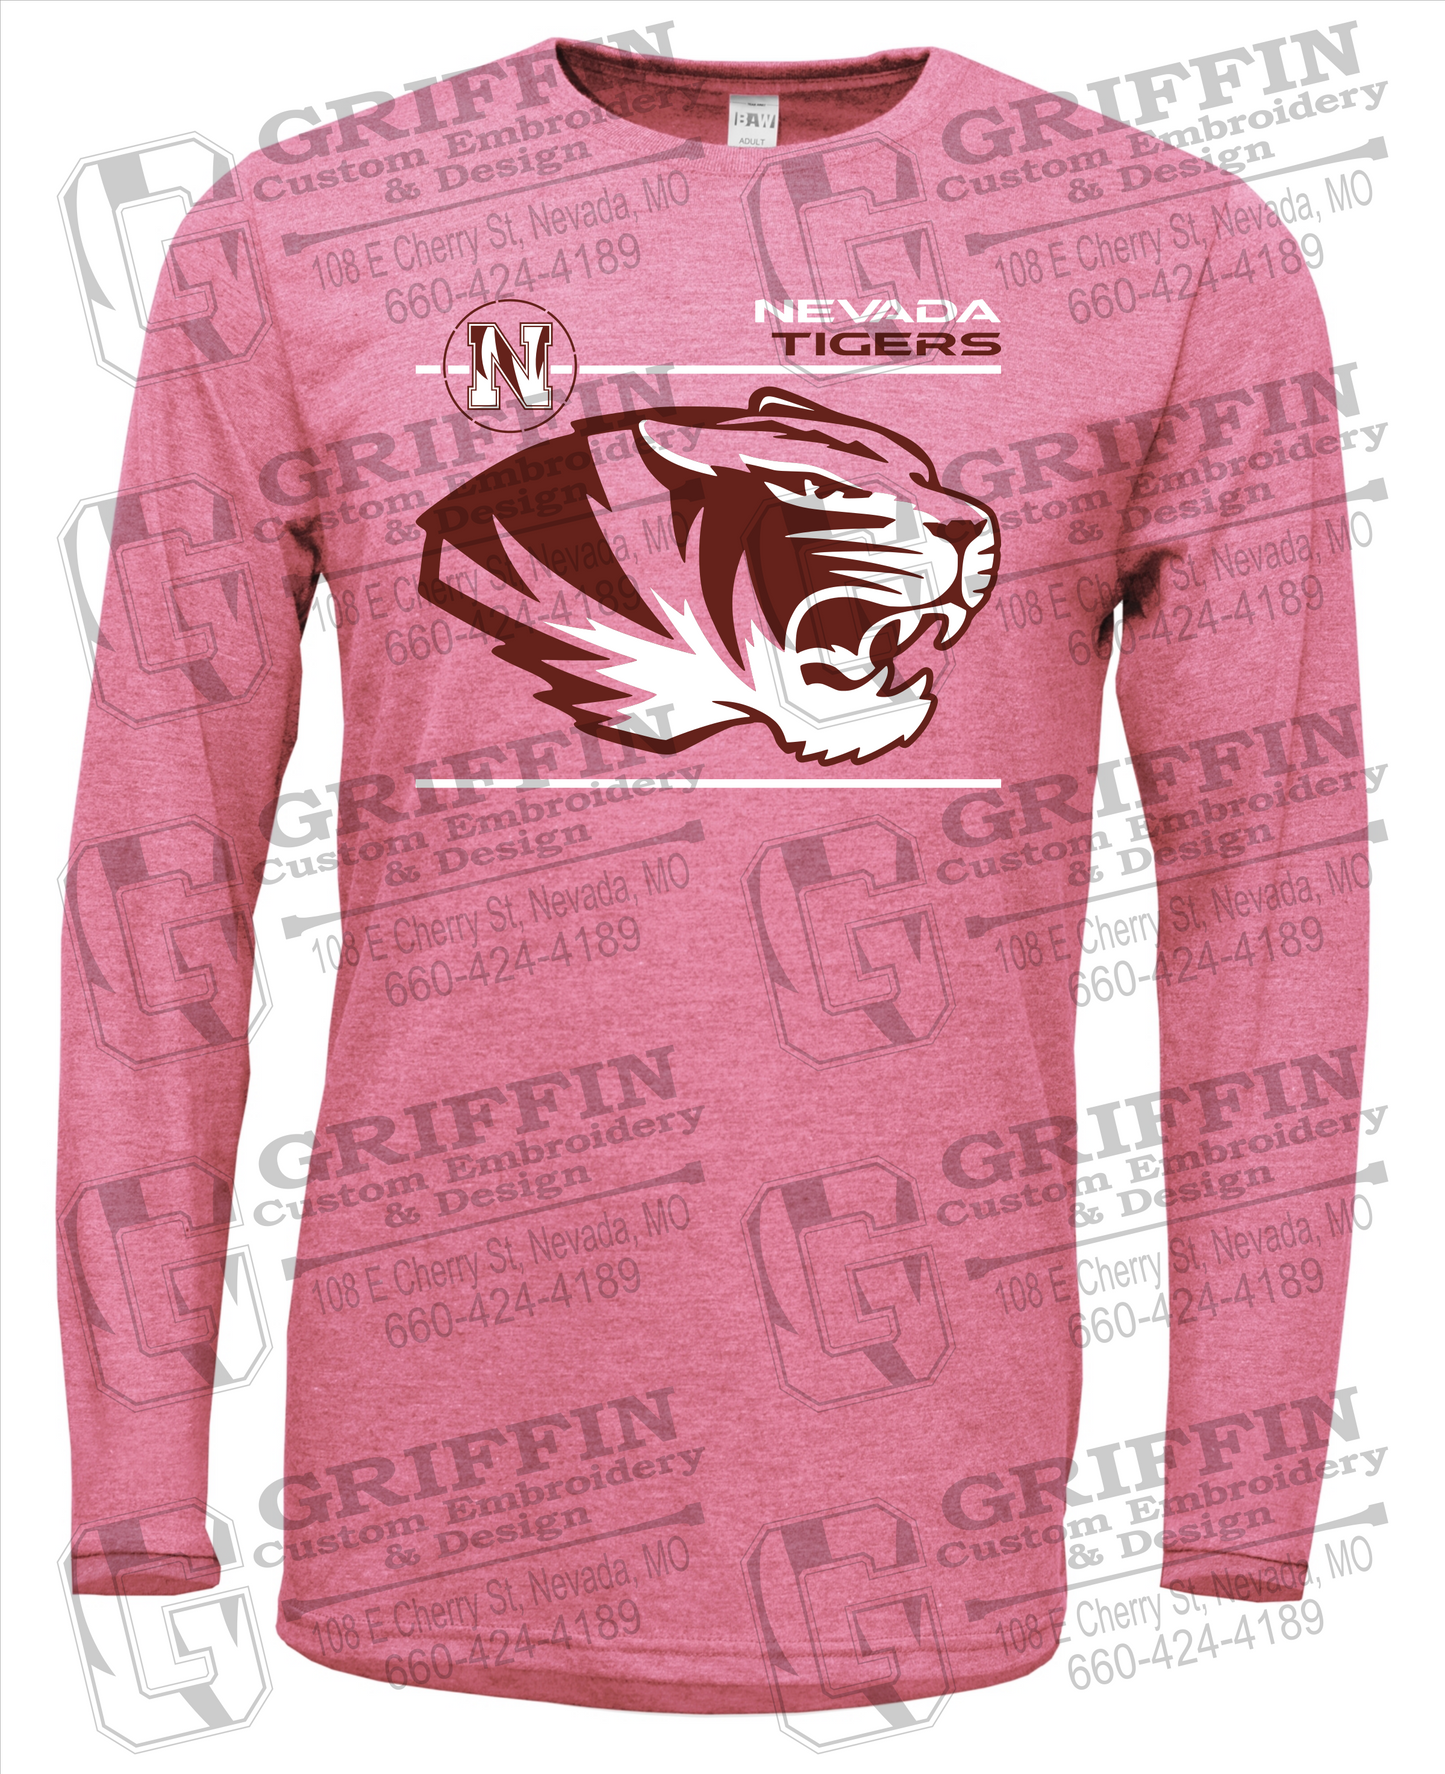 Nevada Tigers 22-D Long Sleeve T-Shirt